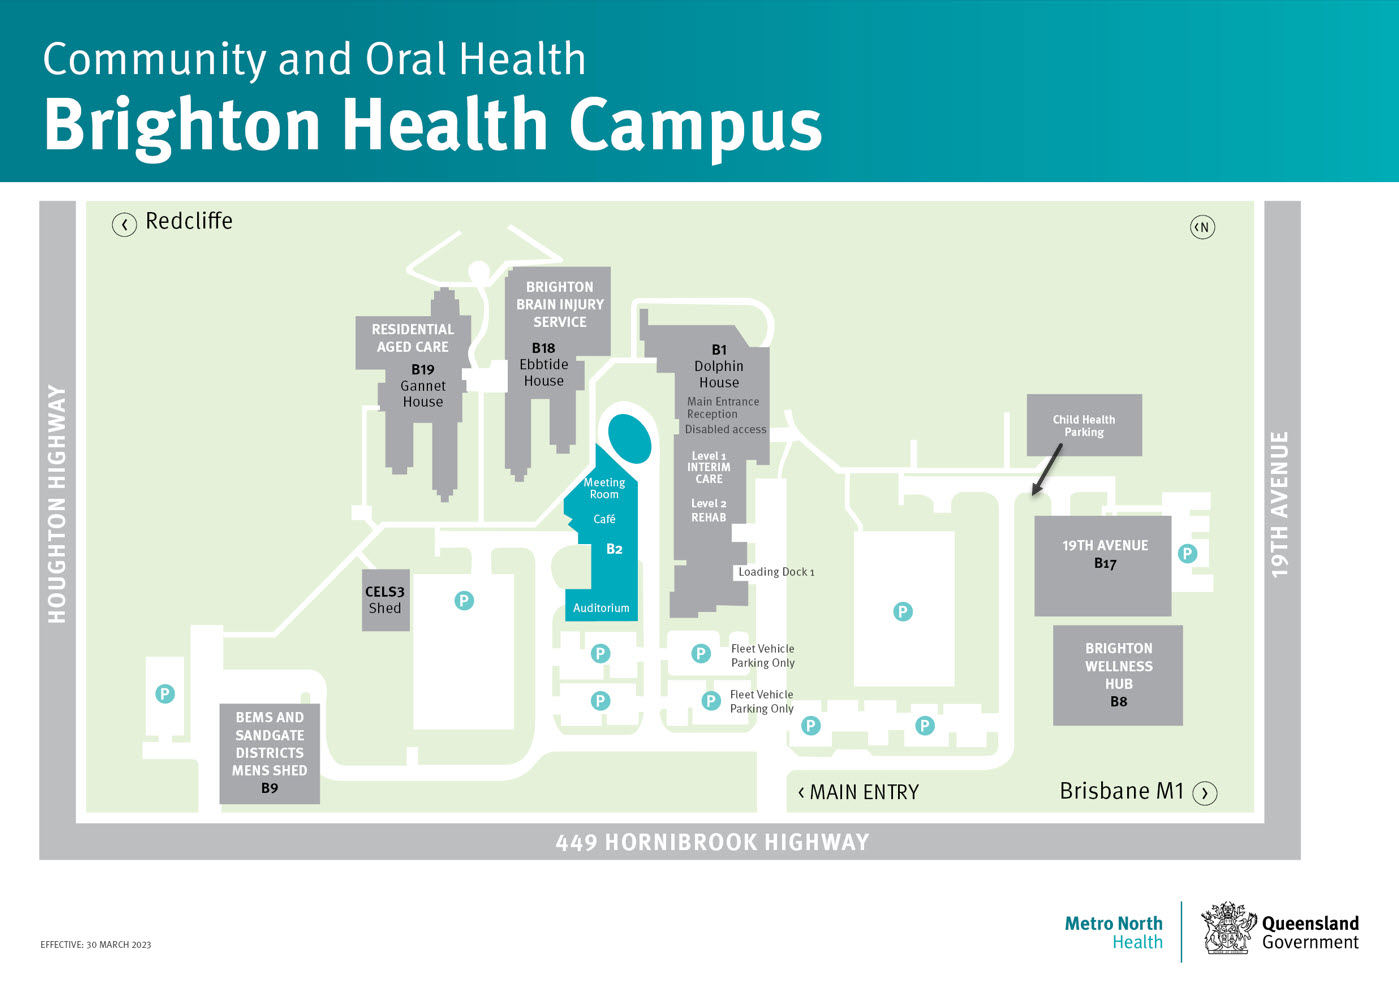 Brighton Wellness Hub - Map